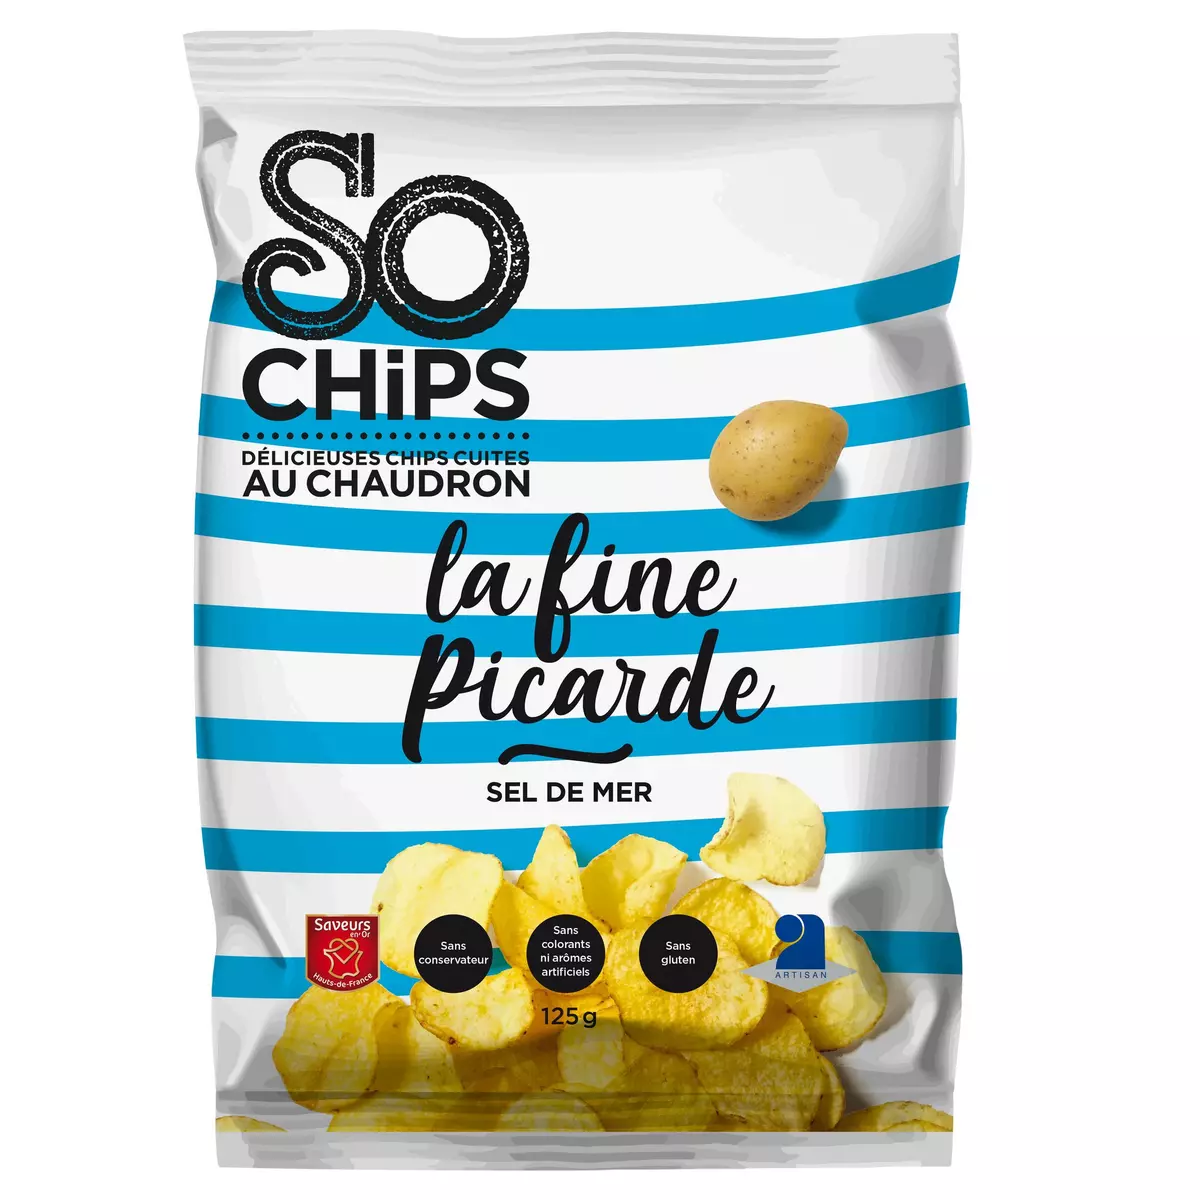 SO CHIPS Chips artisanale La fine picarde sel de mer sans gluten 125g